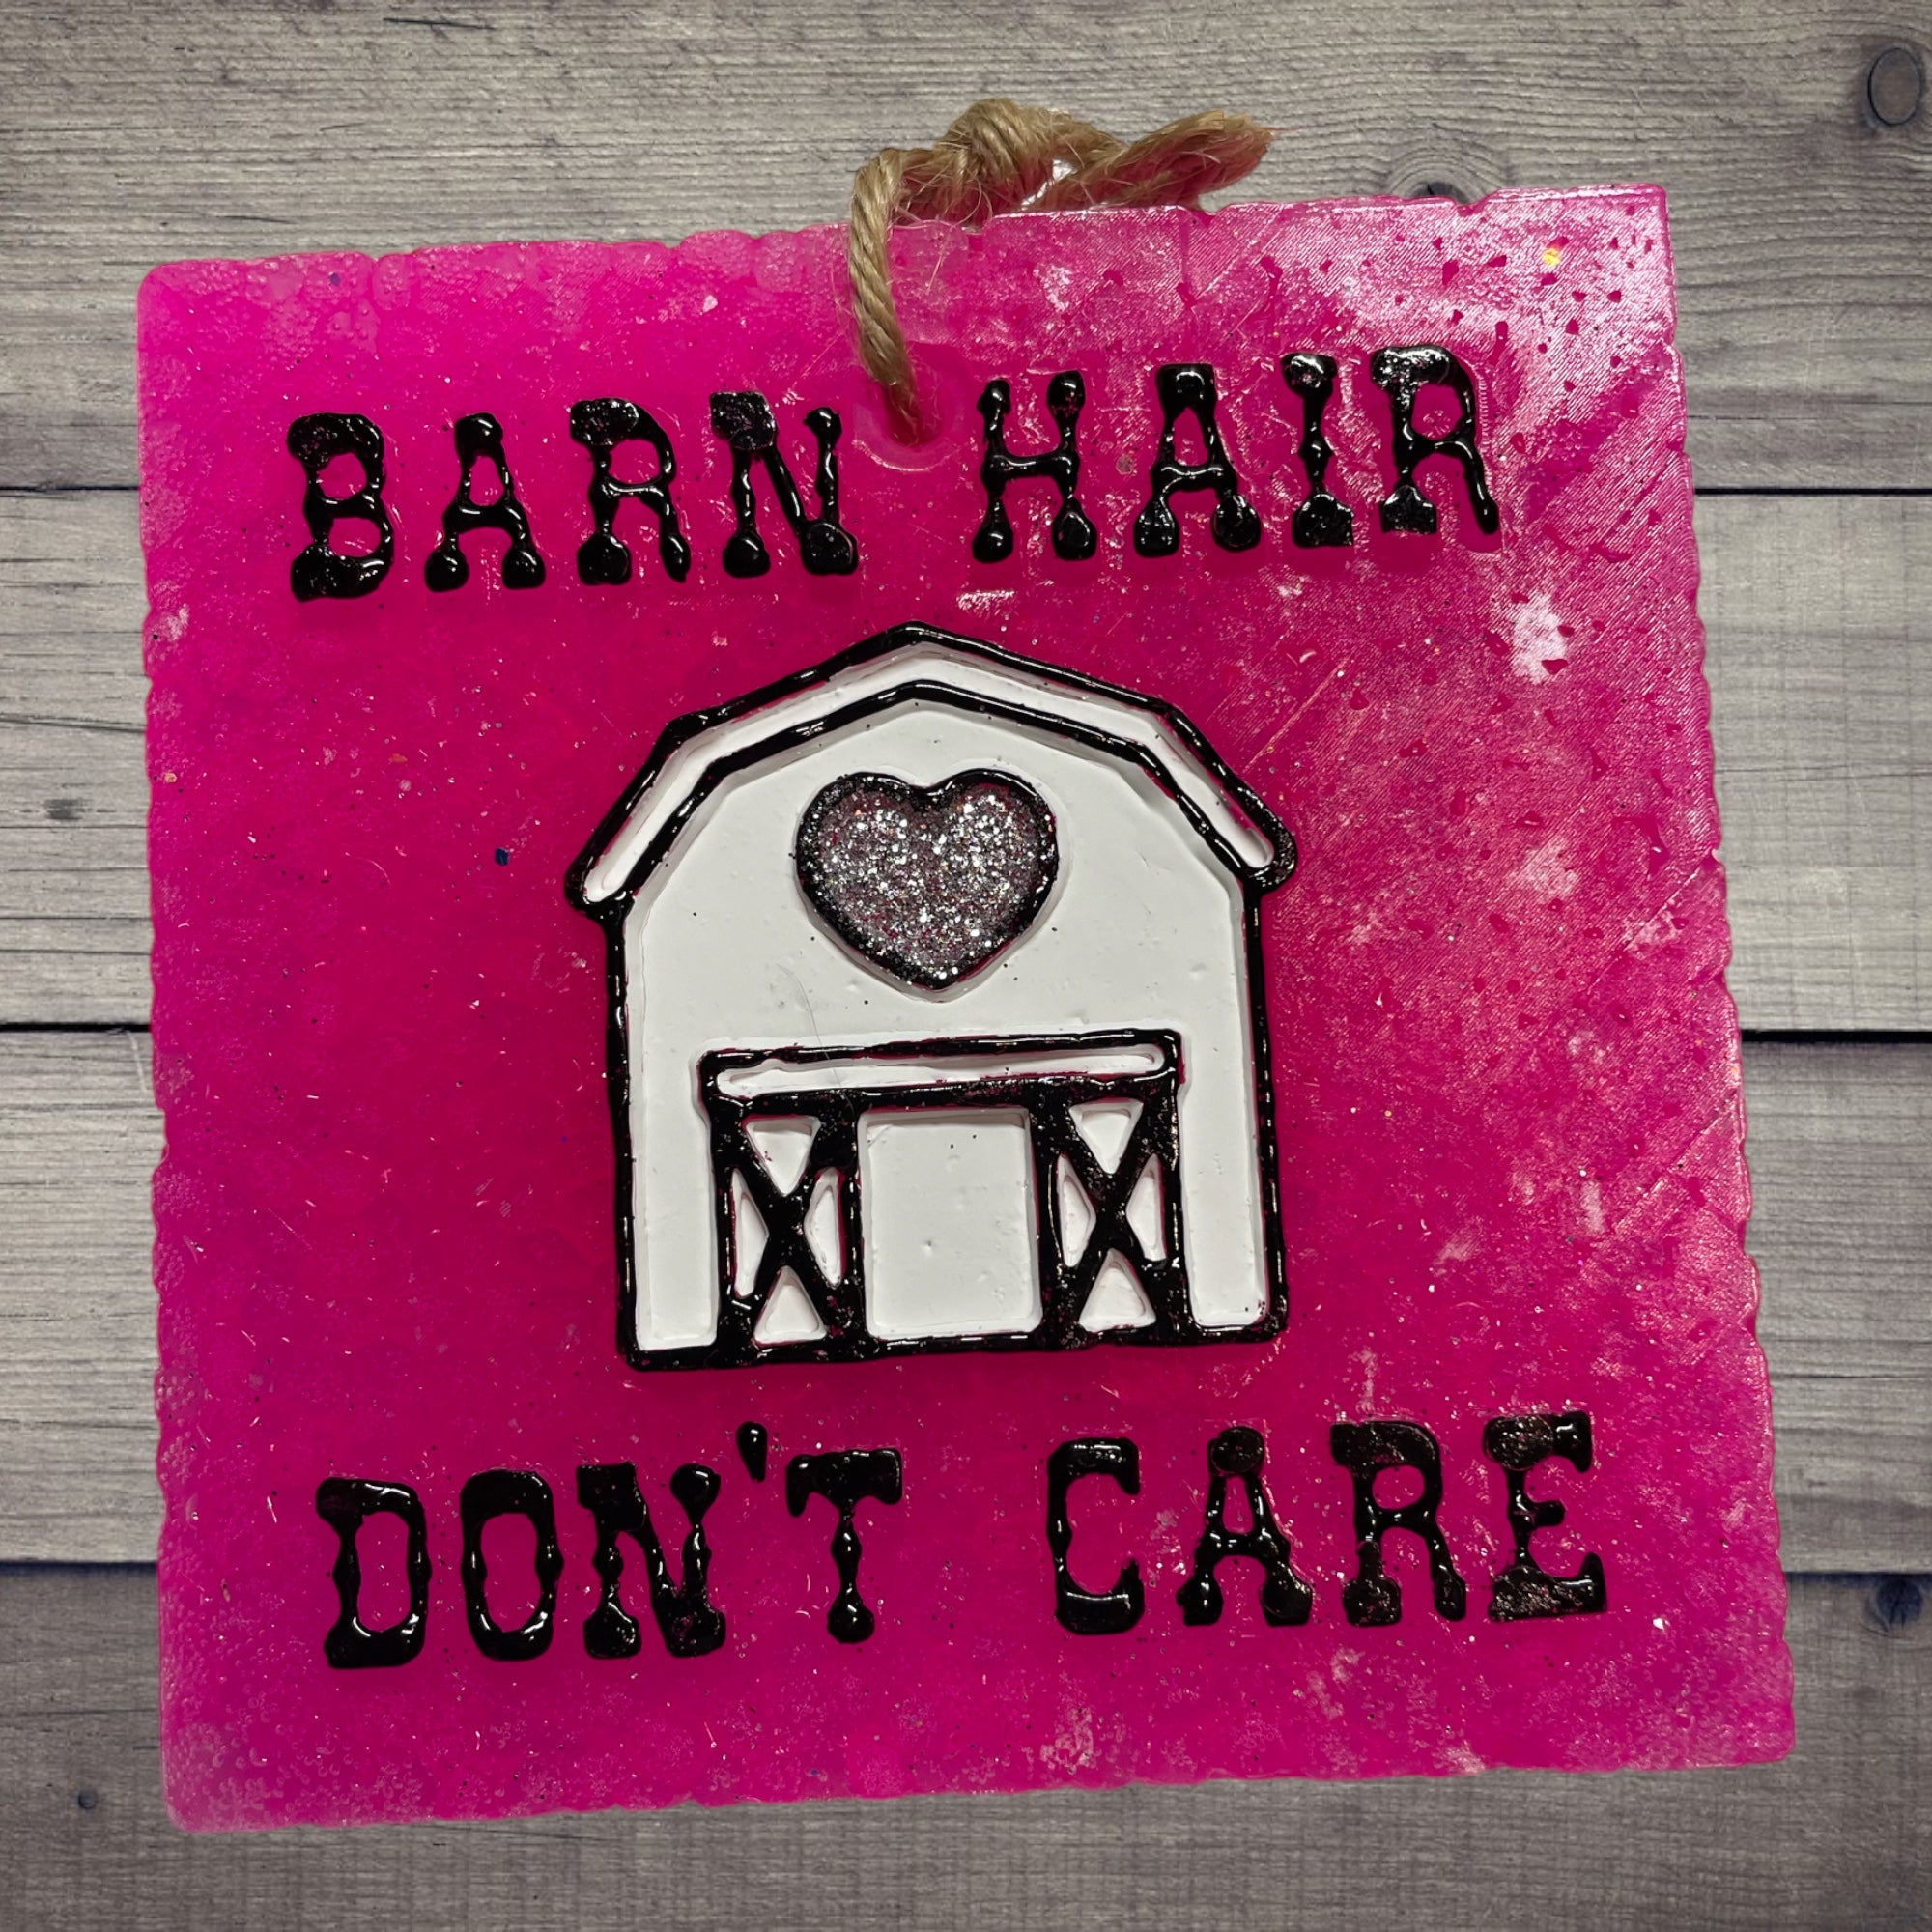 Barn Hair